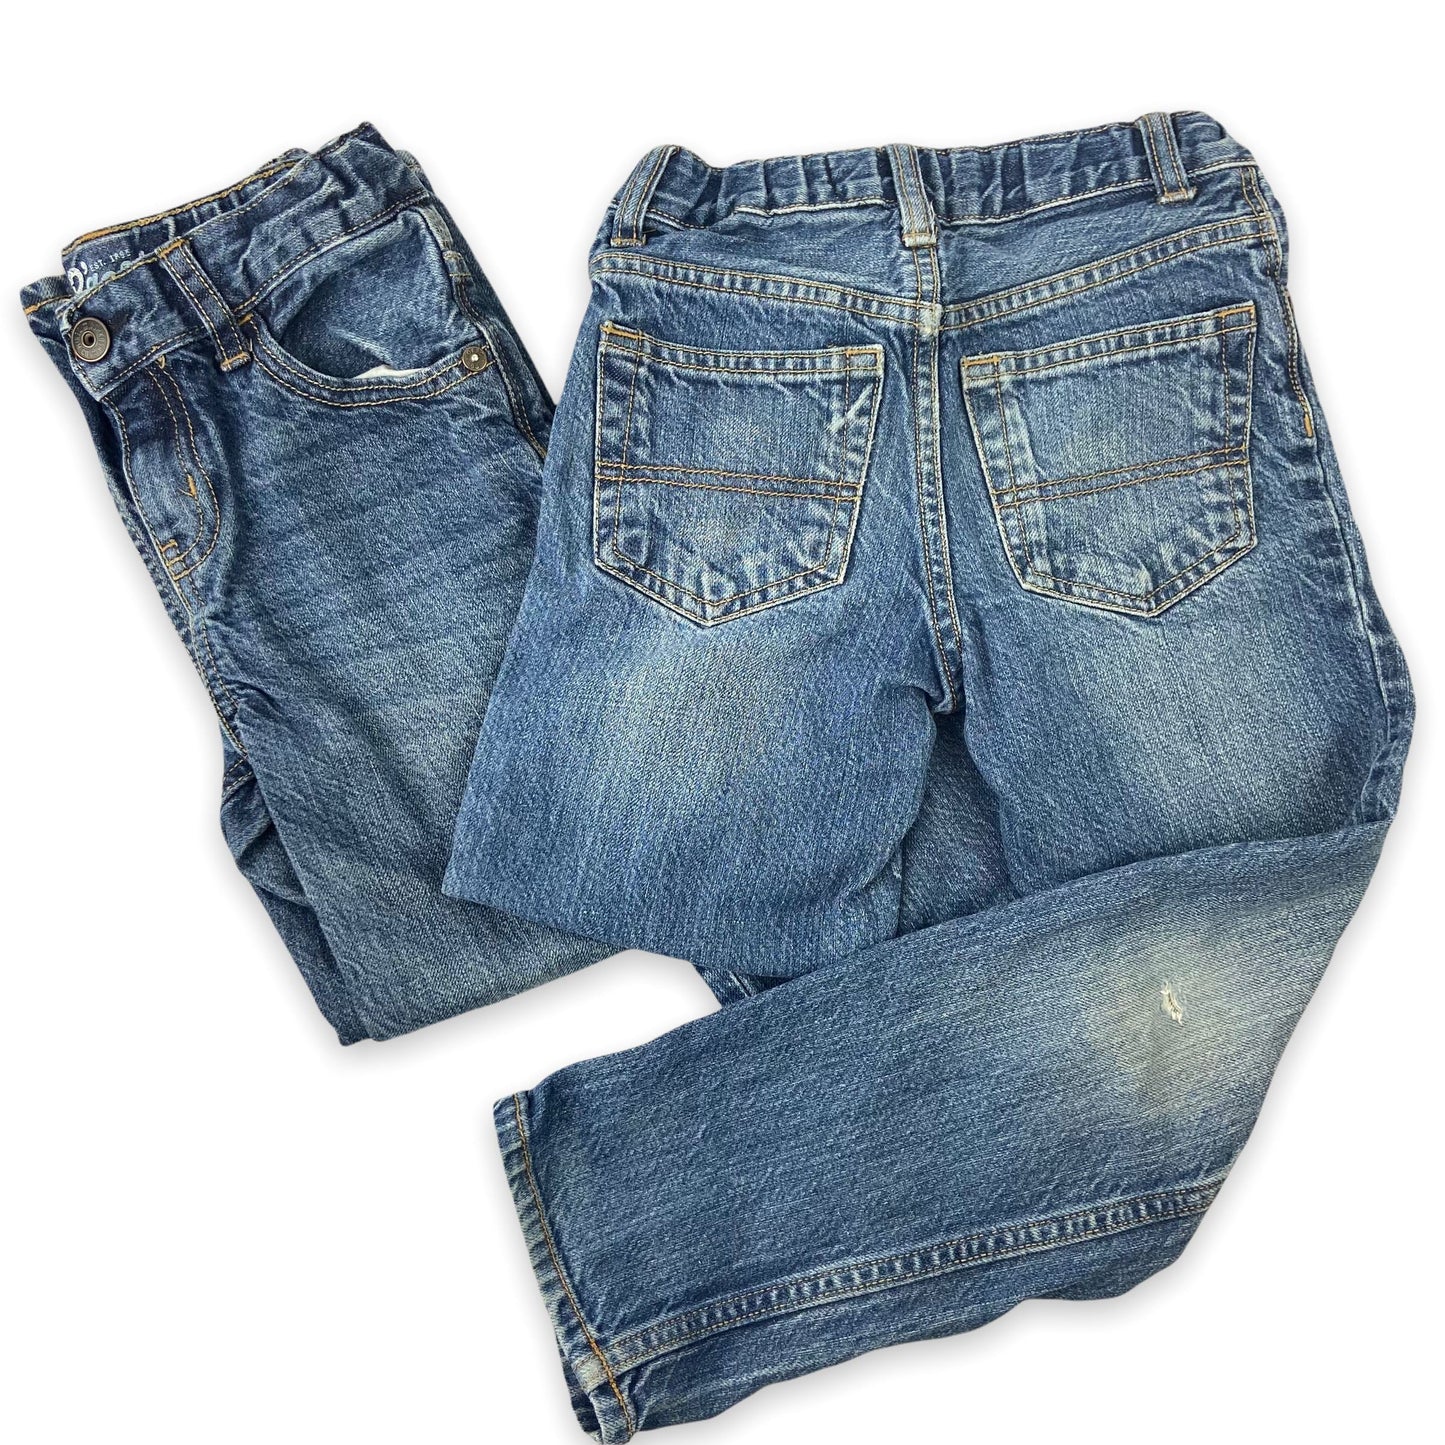 Oshkosh B'Gosh Distressed Jeans Pair 